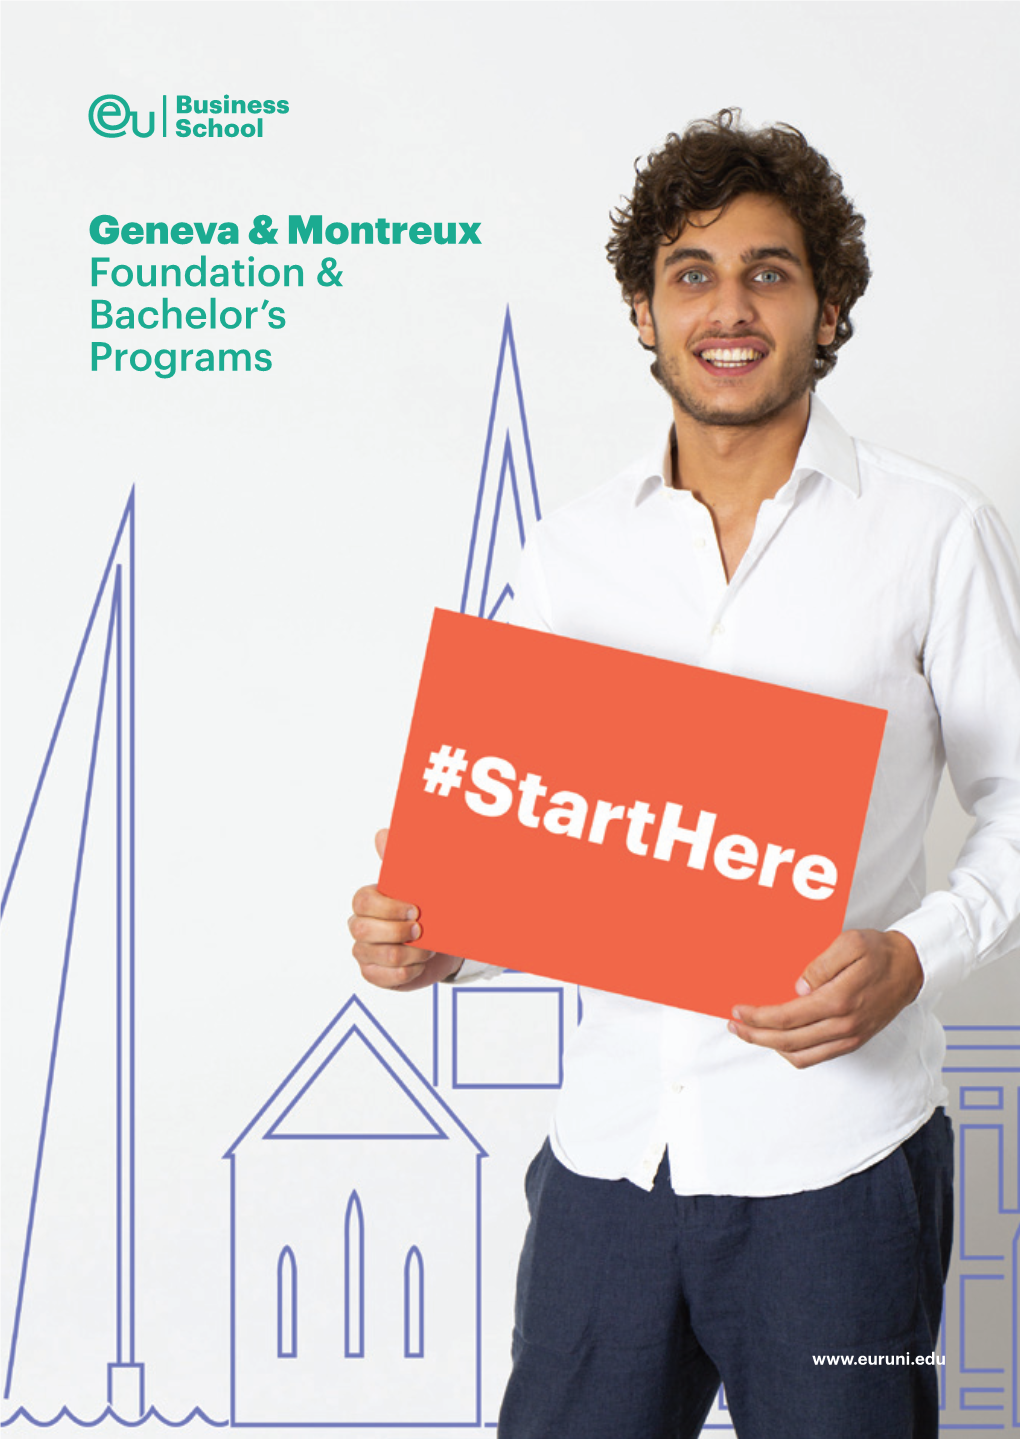 Geneva & Montreux Foundation & Bachelor's Programs